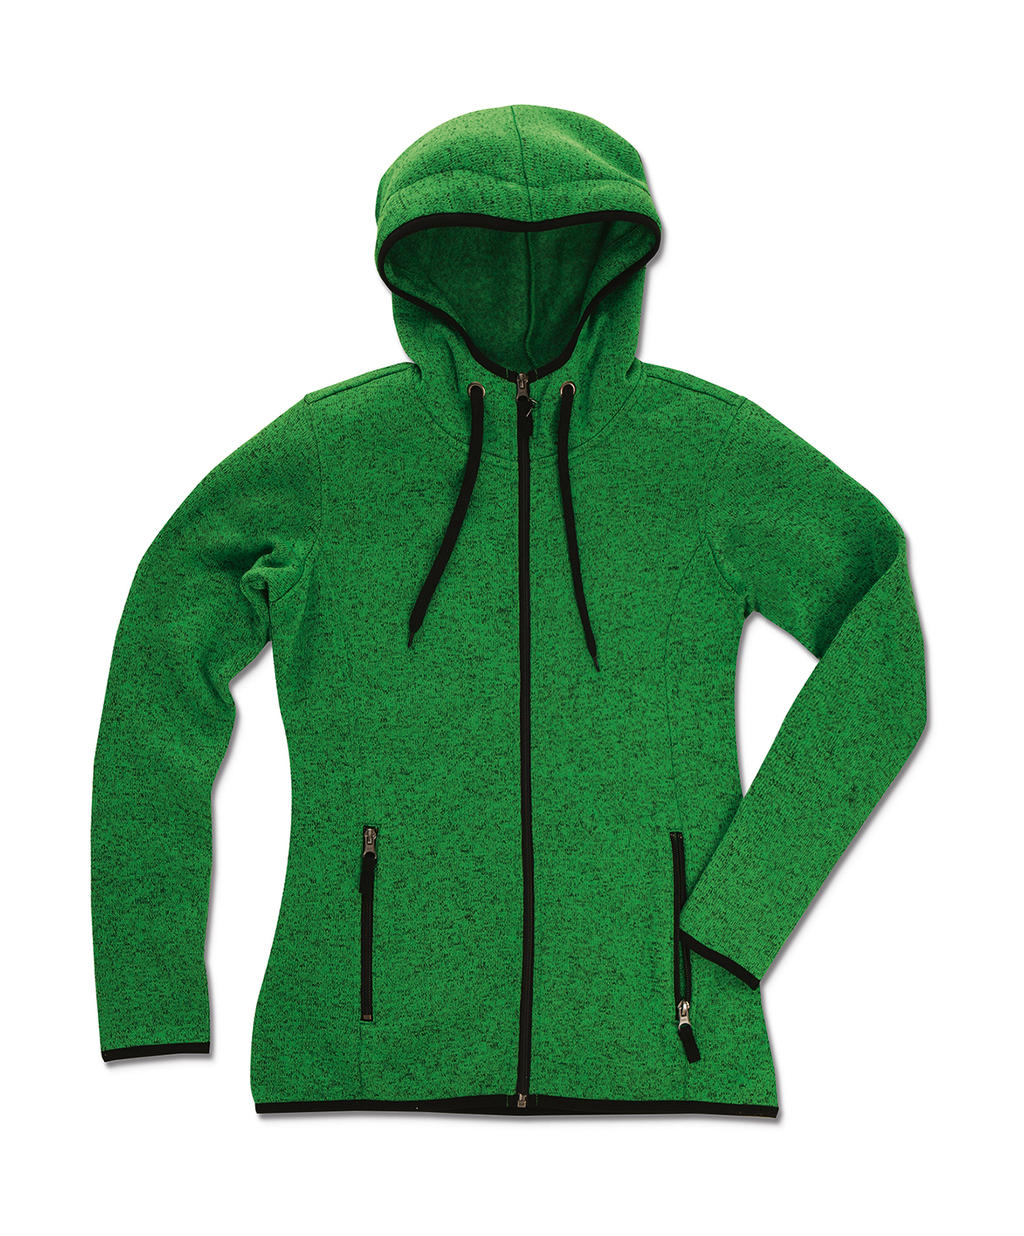 Active Knit Fleece Jacket Women Green melange 